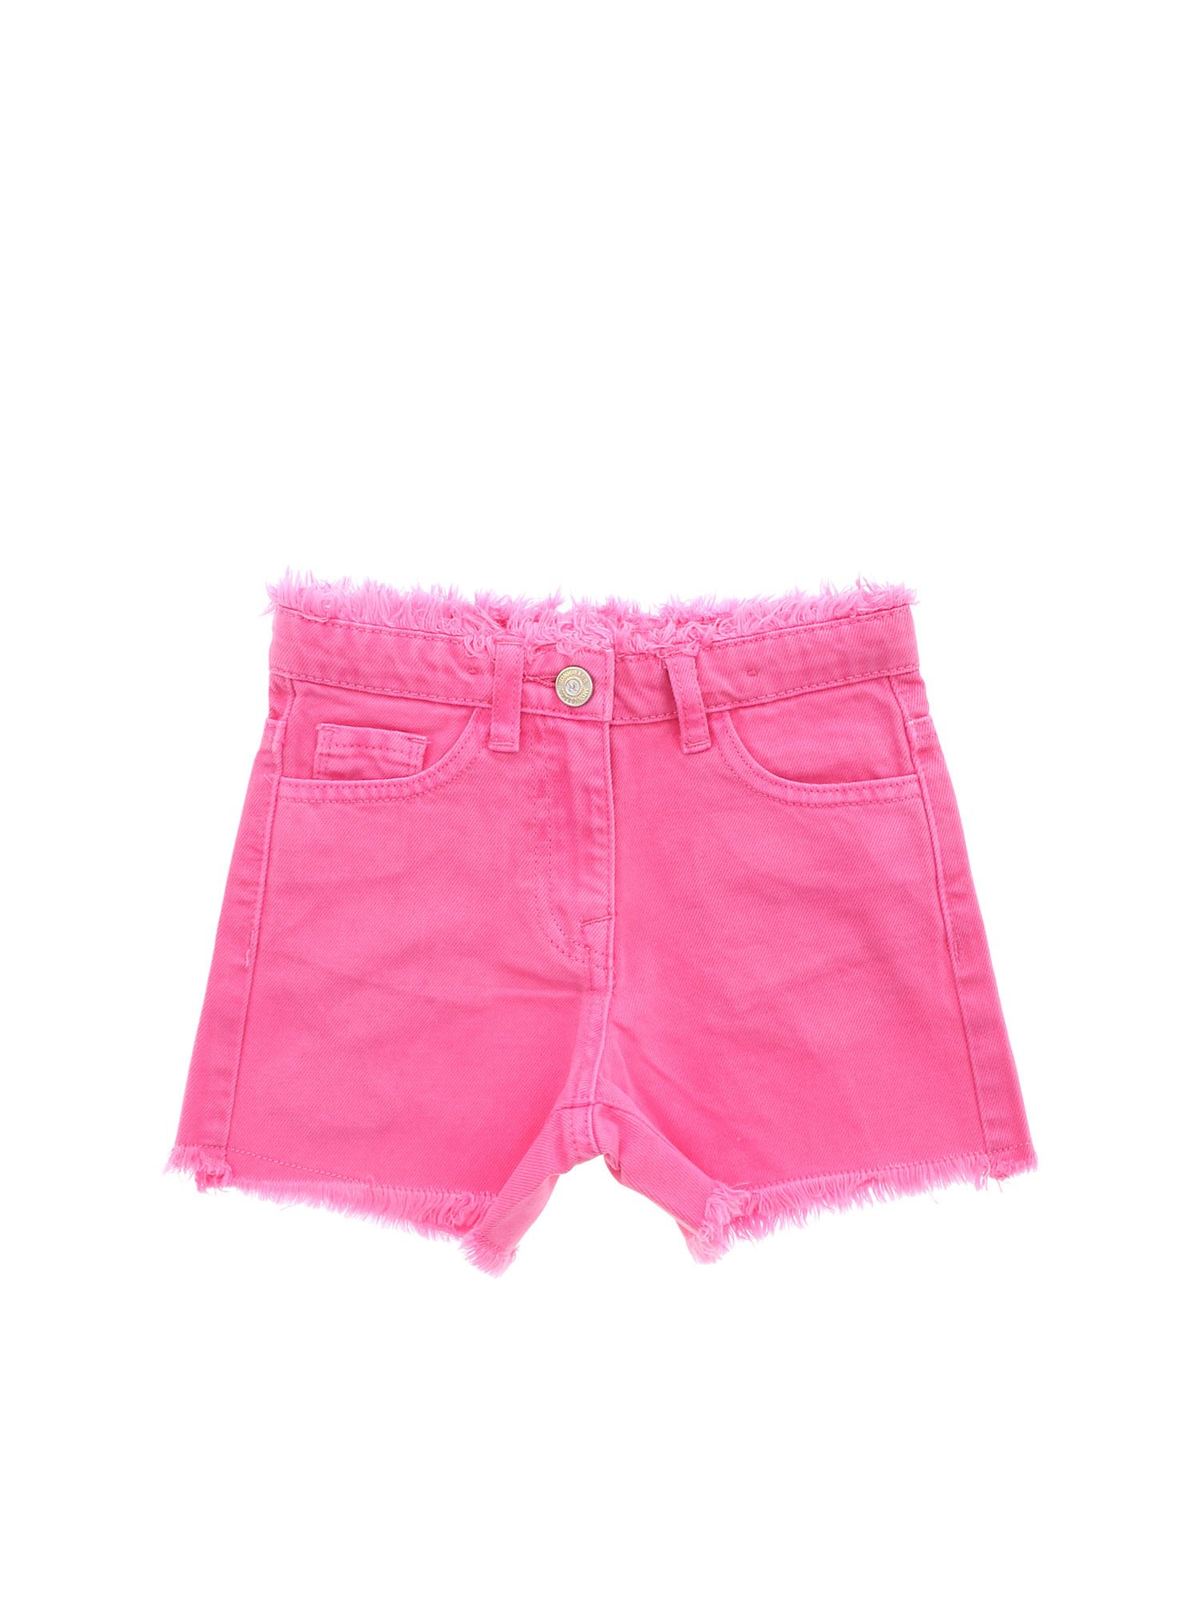 Monnalisa - Bugs Bunny embroidered denim shorts in pink - shorts ...